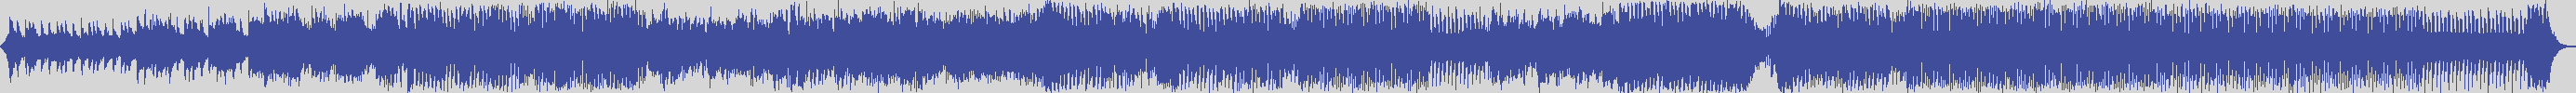 definitiva [DEF006] Dj Bum Bum - Believe [Krosa Extended Rmx] audio wave form